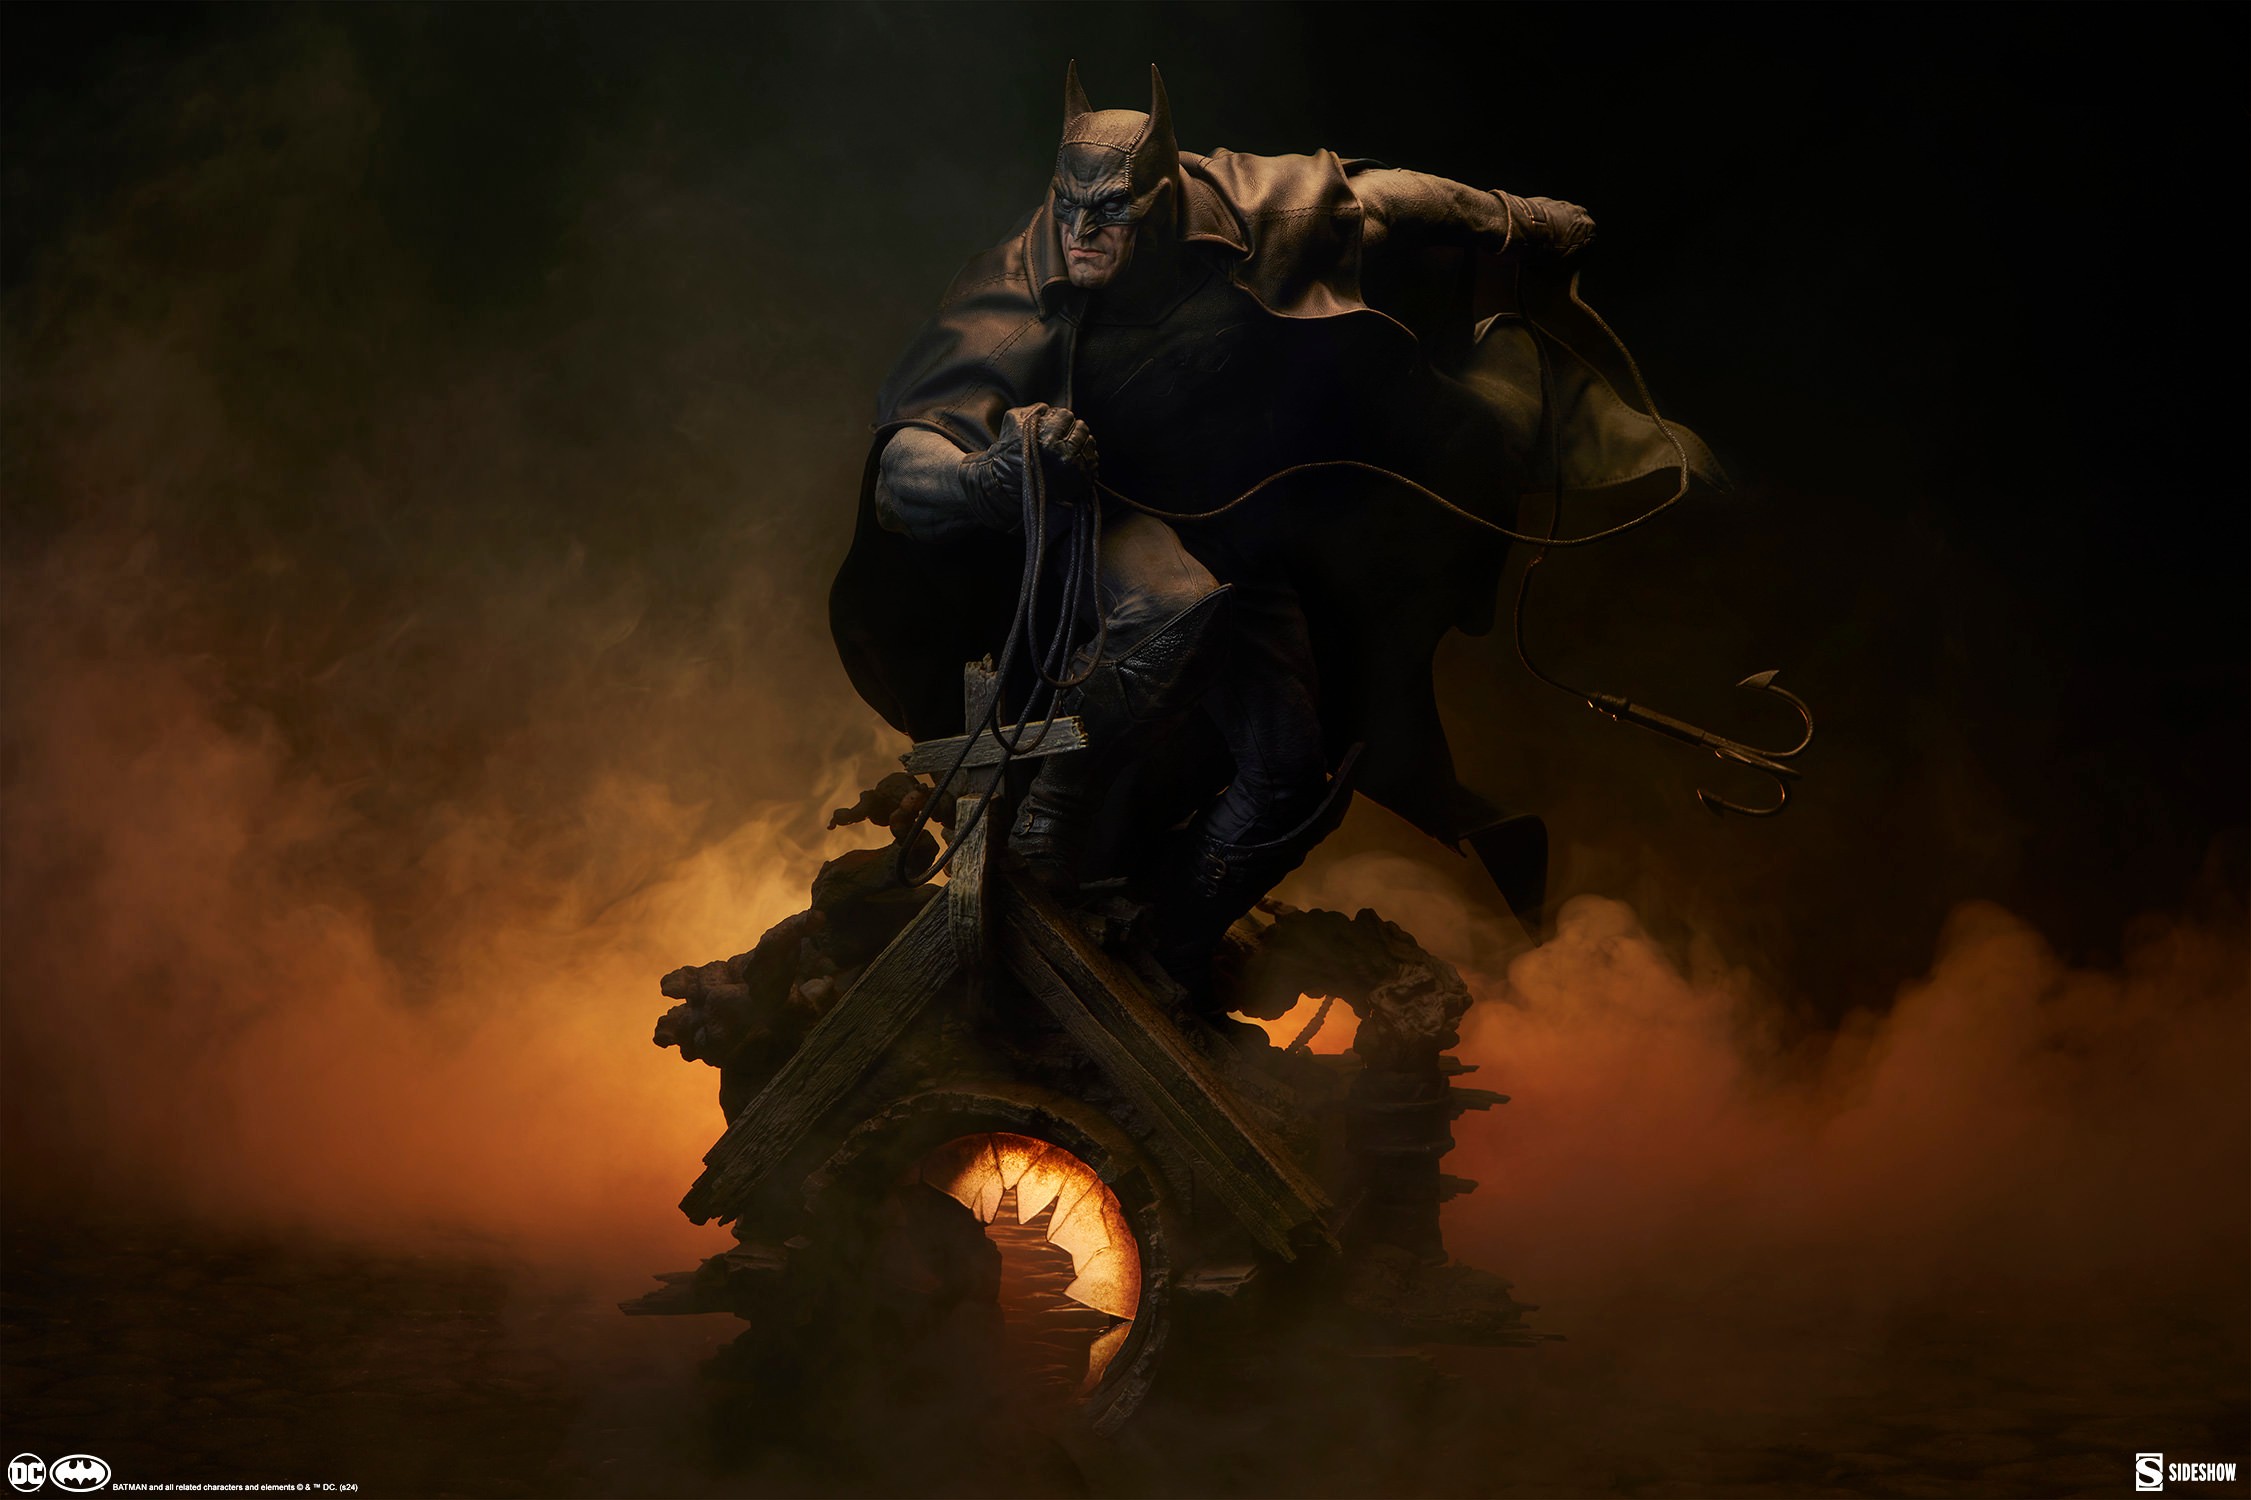 Batman: Gotham by Gaslight (Prototype Shown) View 2